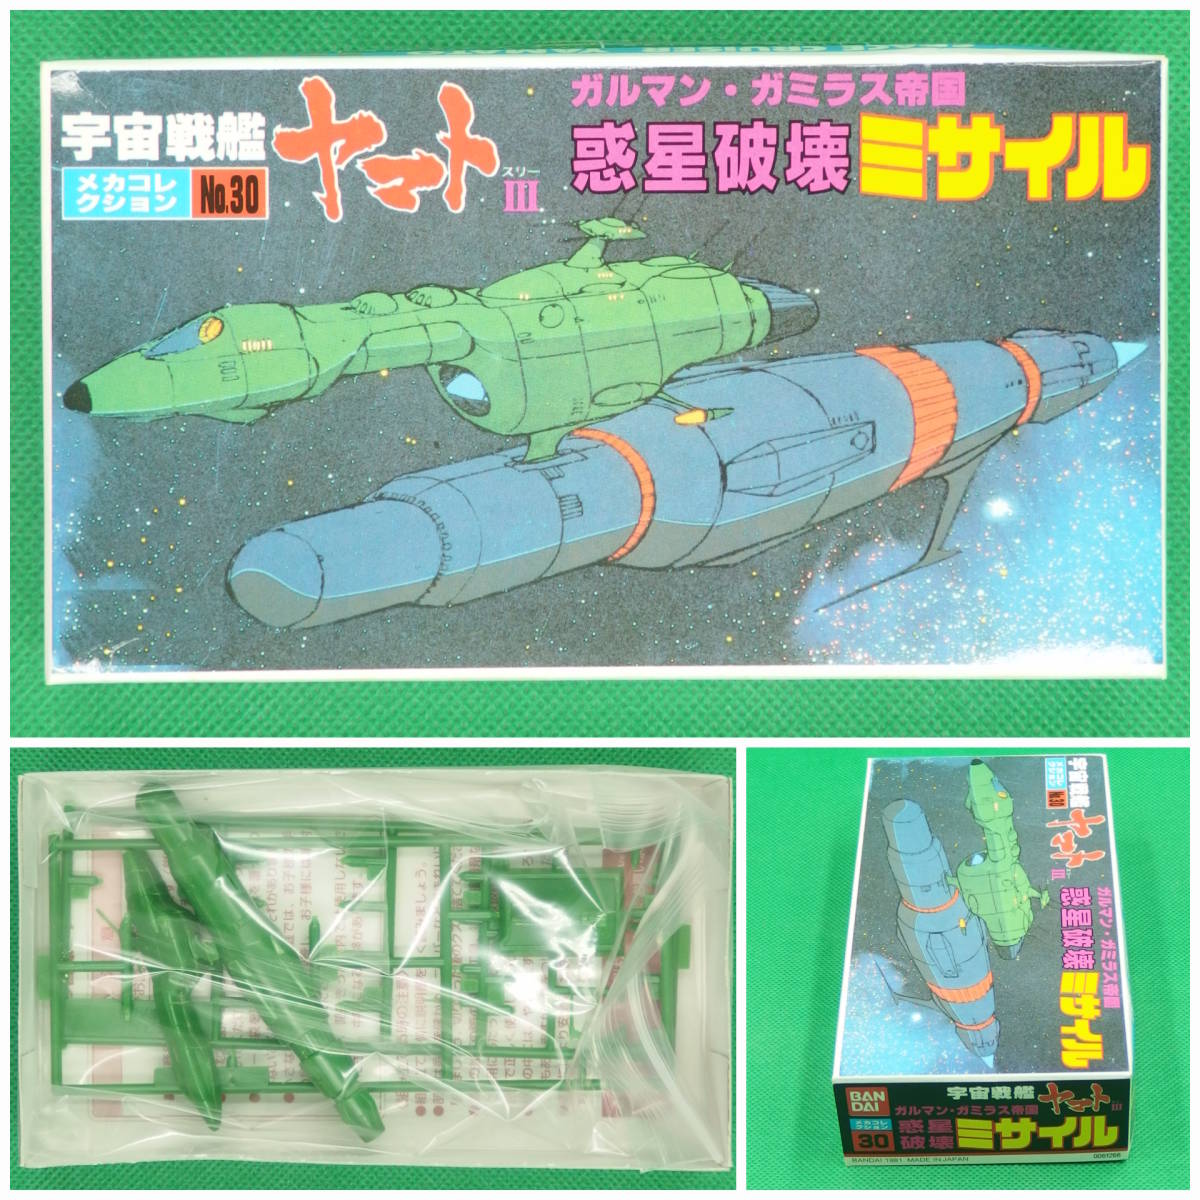  Bandai [ Uchu Senkan Yamato Ⅲ] mechanism collection No.30V planet destruction .misa il ga Le Mans * Gamila s. country [ construction on the way * Junk ]